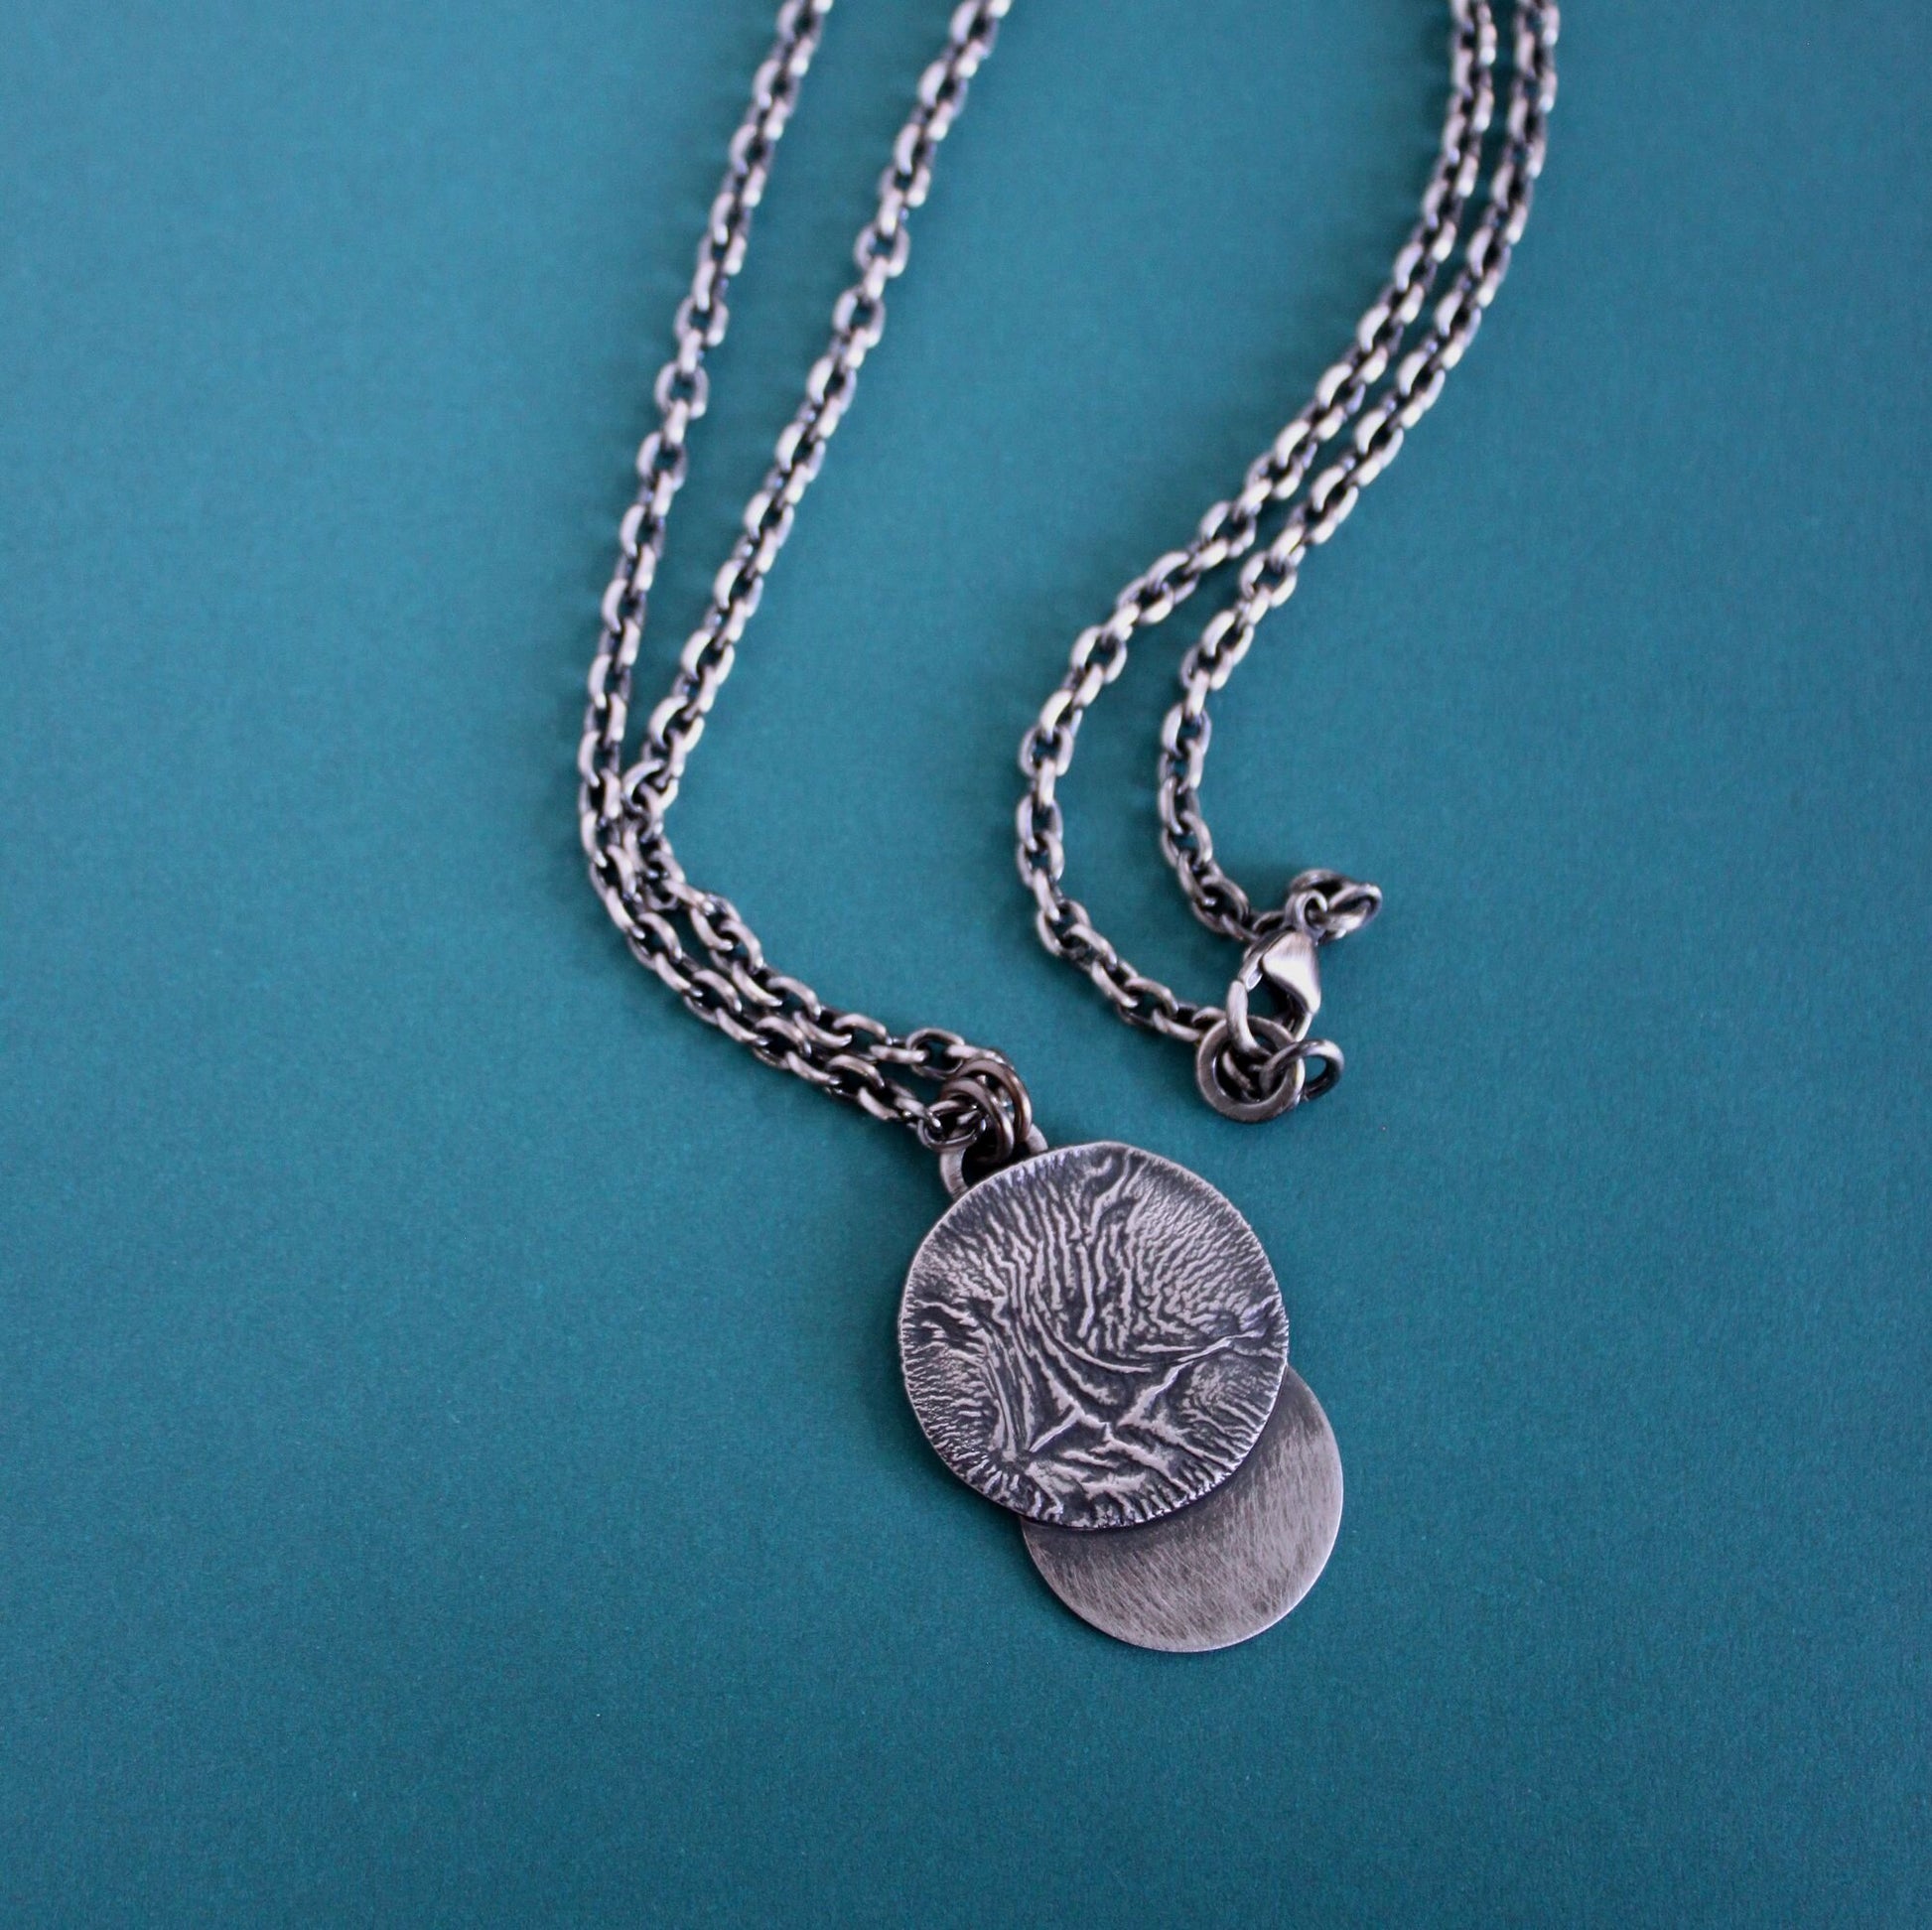 Men's rustic silver pendant necklace